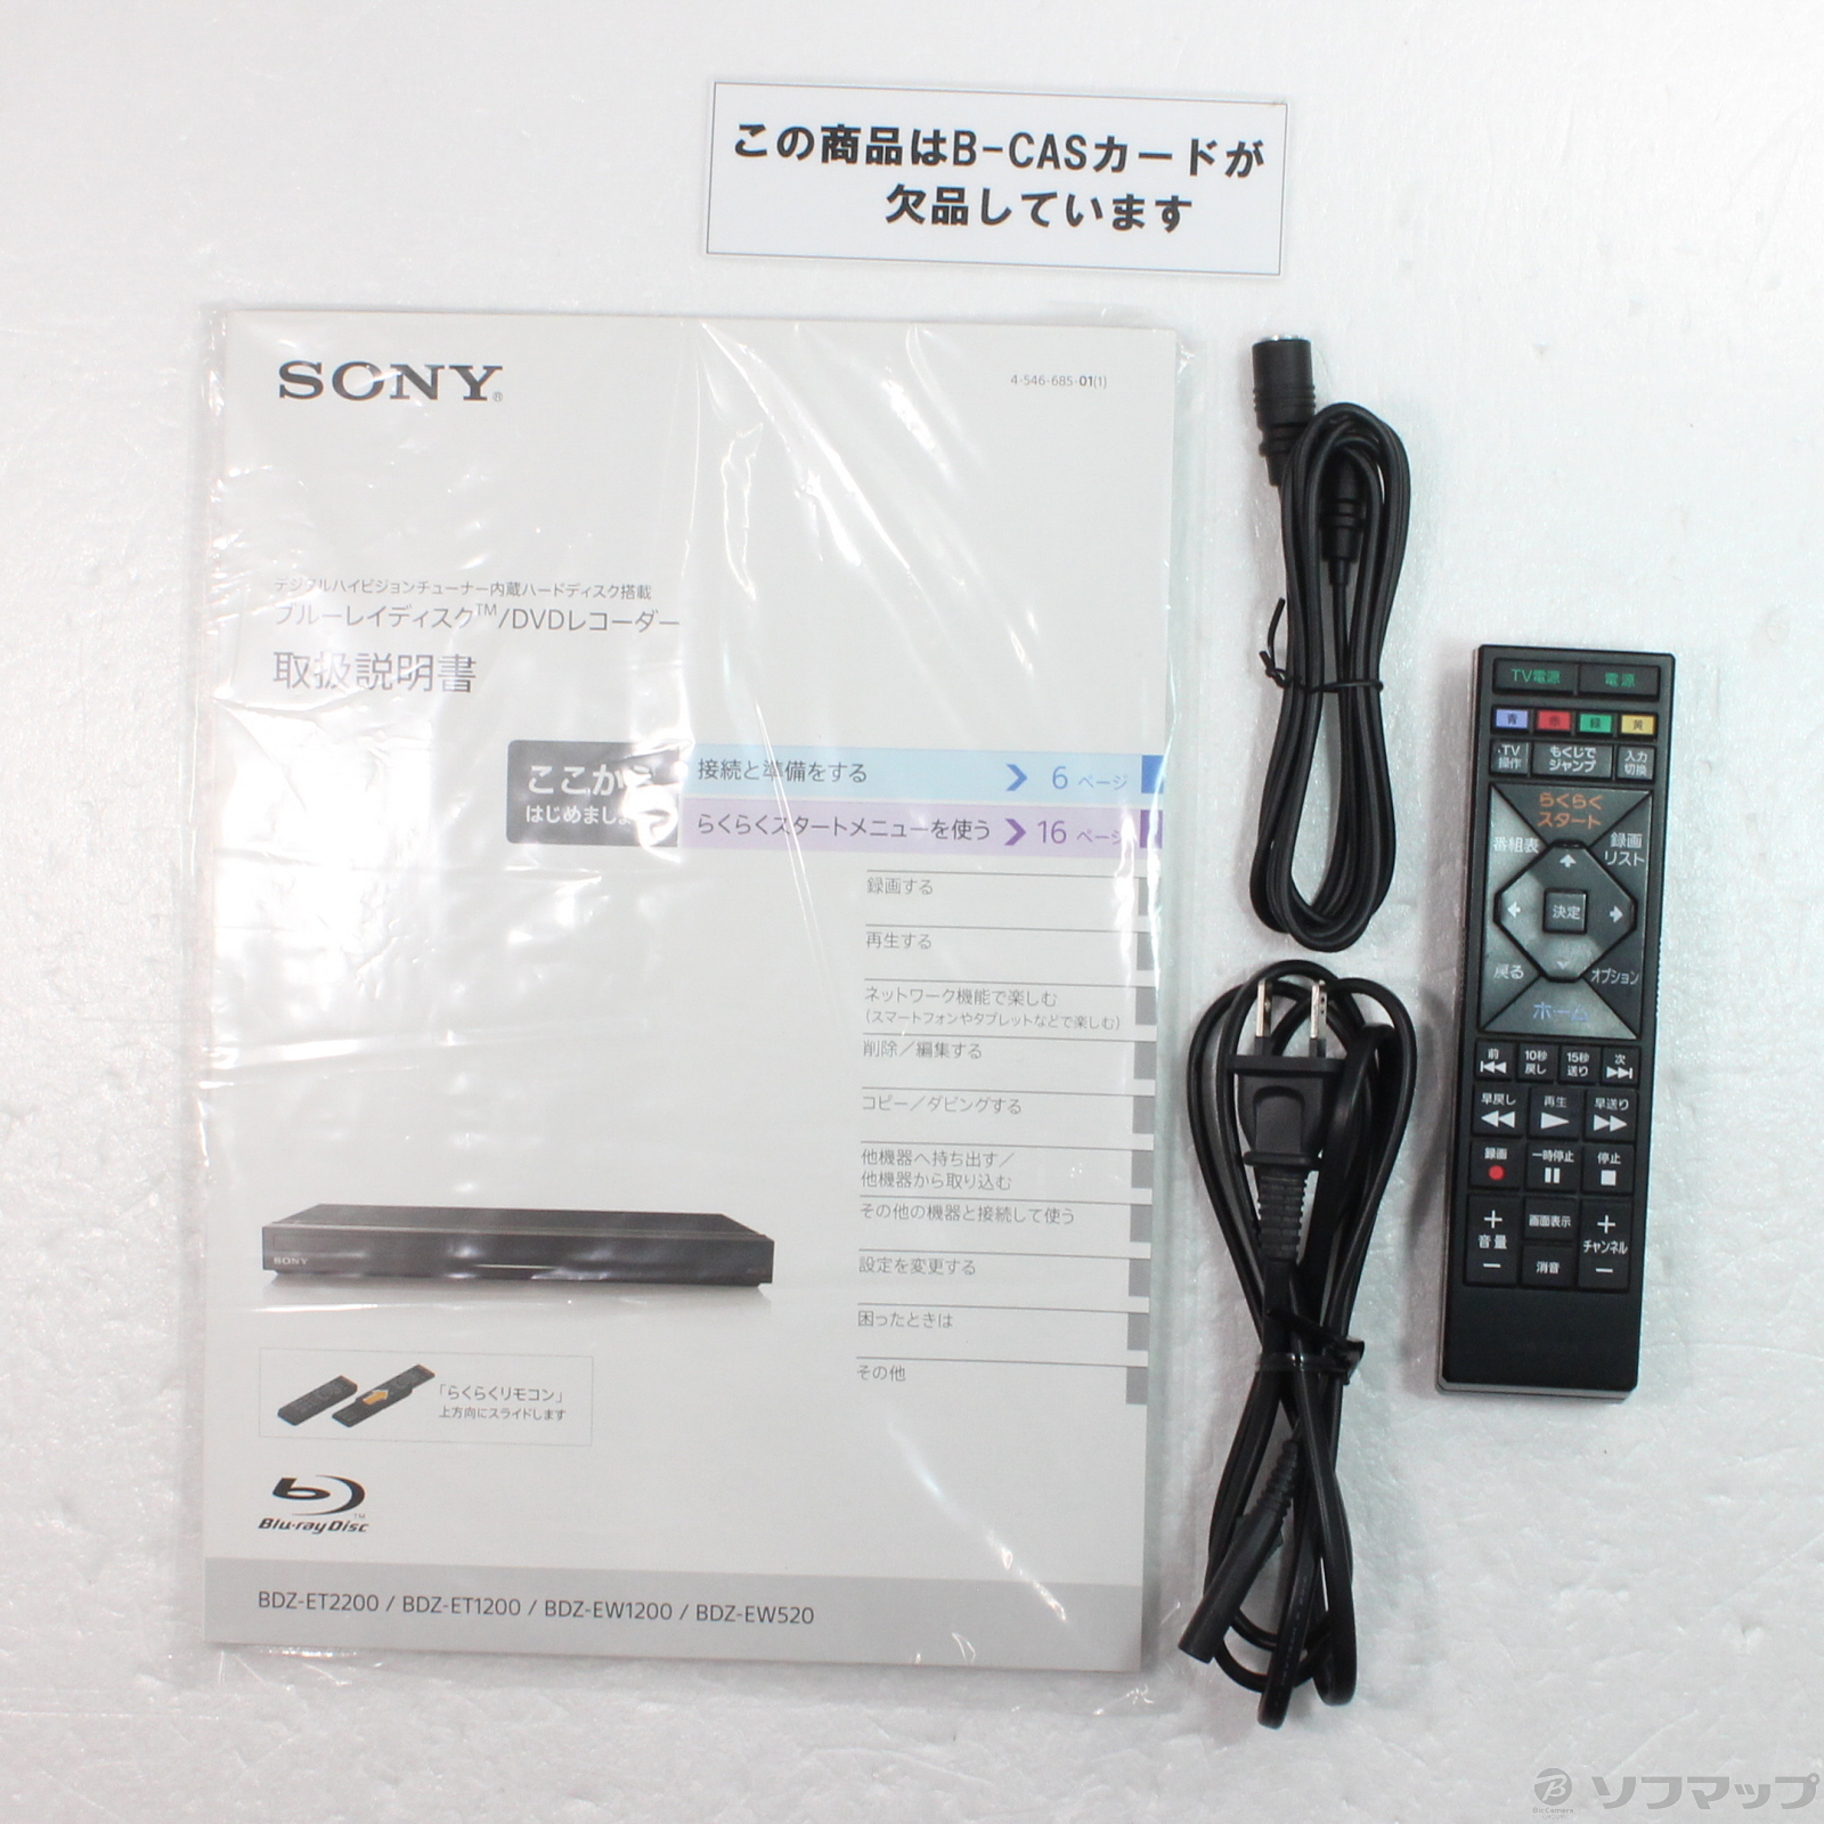 SONY ブルーレイレコーダ BDZ-ET1200 3番組同時録画 HDD1TB